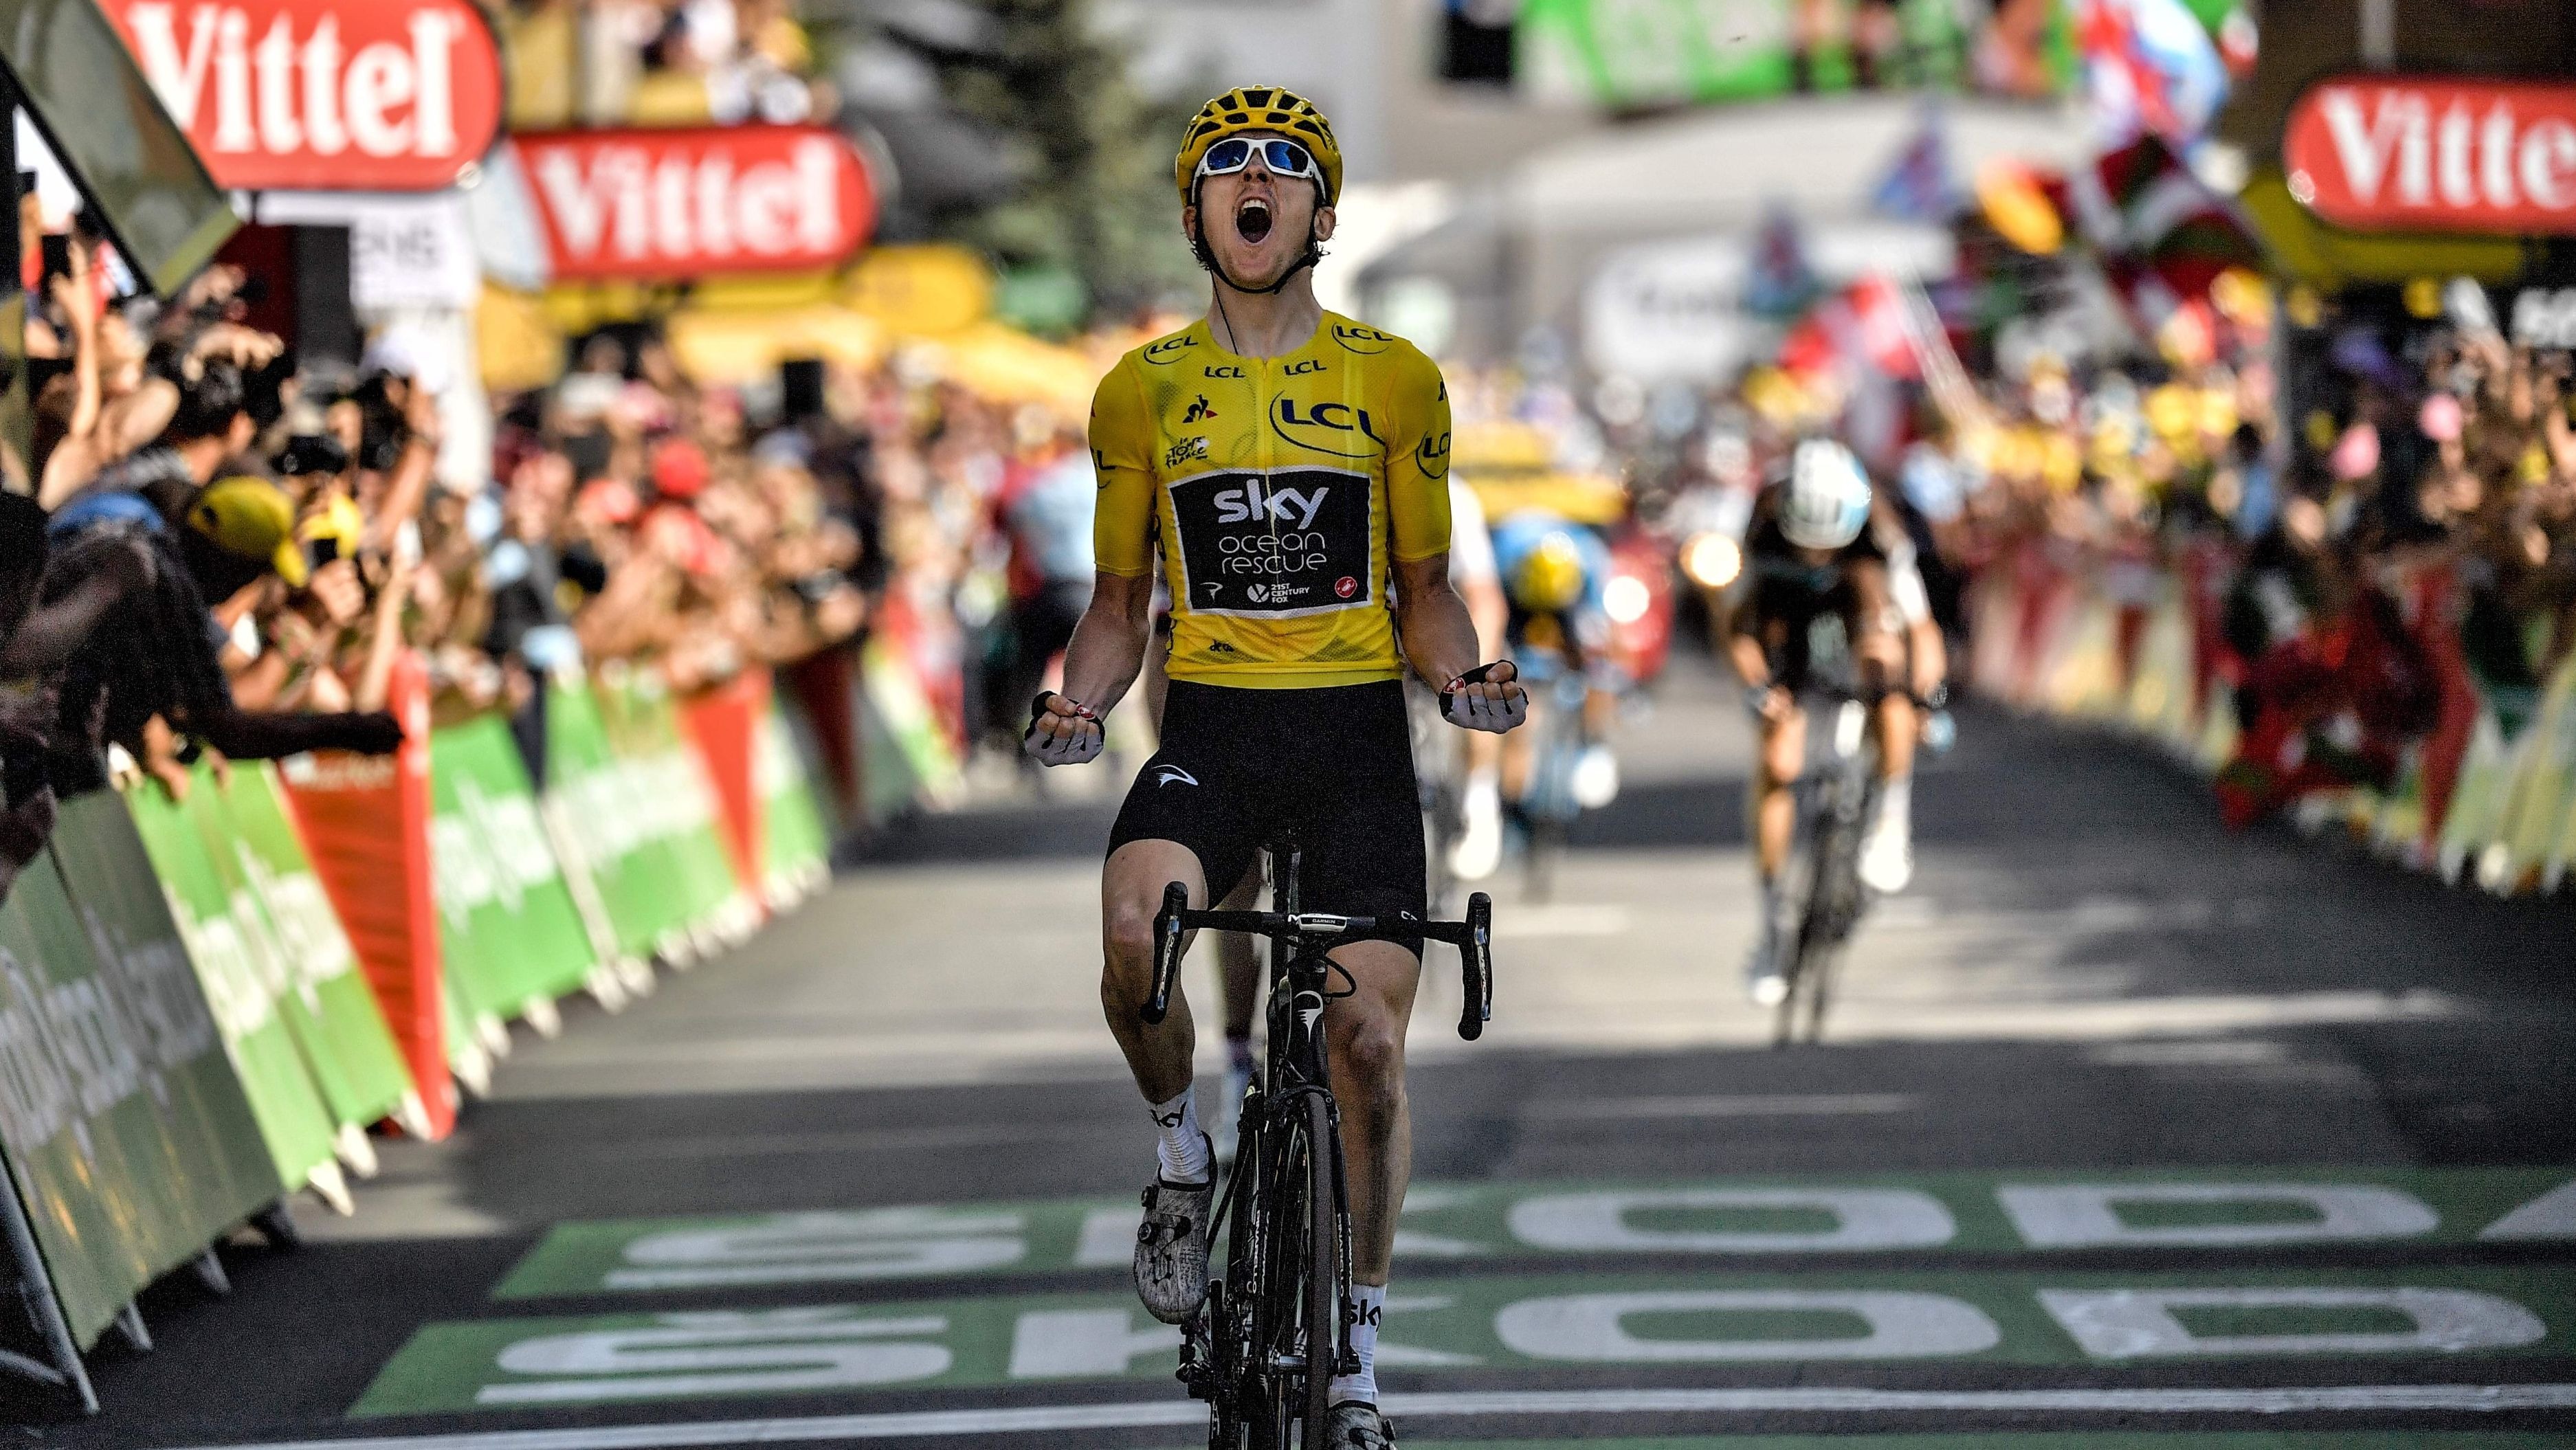 Team Sky cyclist Geraint Thomas won the 2018 Tour de France 